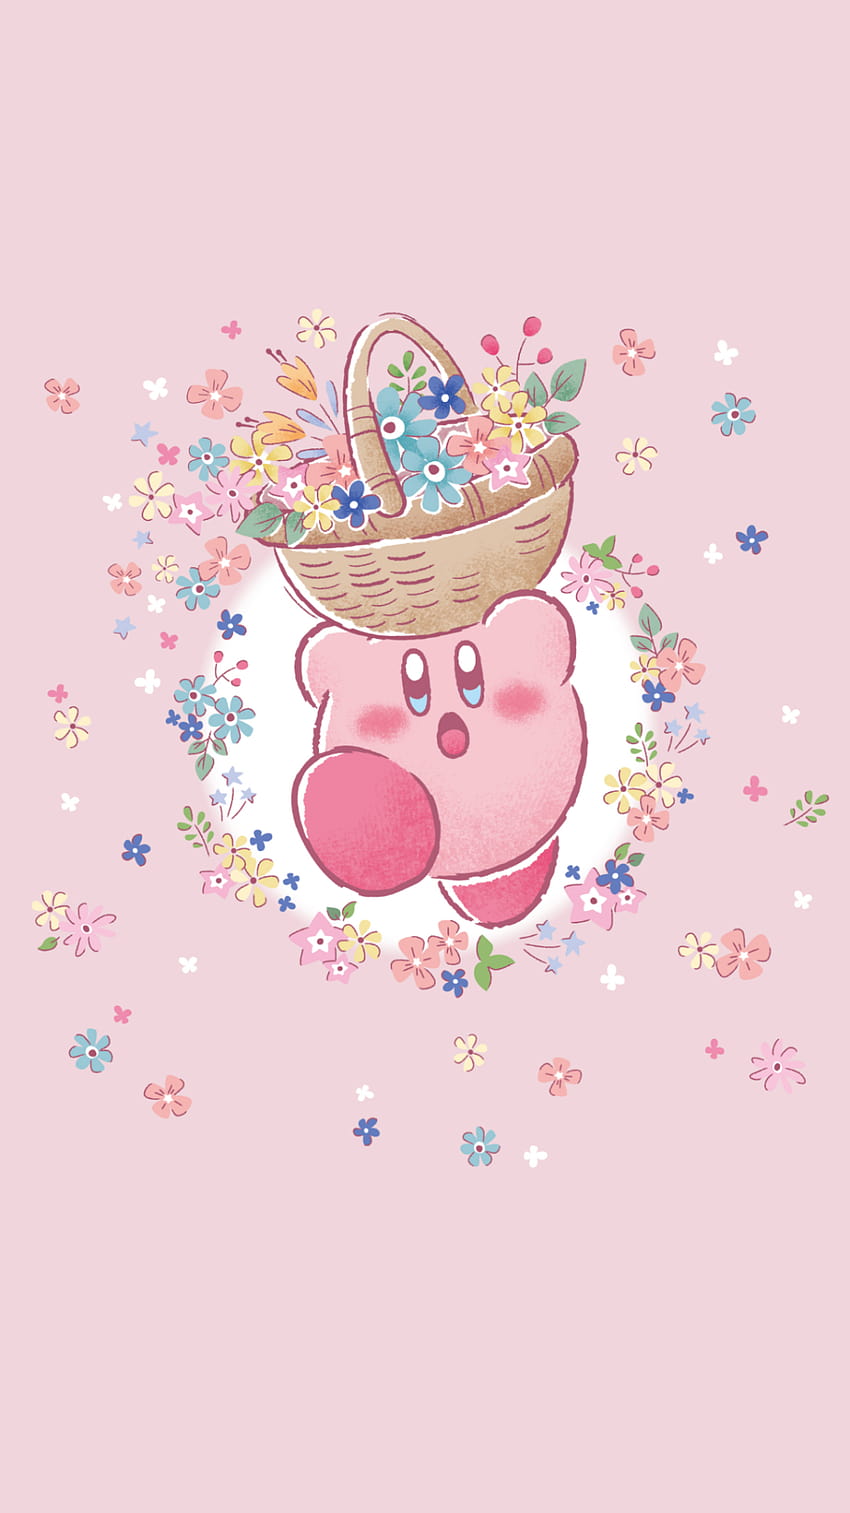 Kirby Kawaii Anime Games Cute Cartoon Pink Mini Kirby Collect Dol | Fruugo  DE-demhanvico.com.vn